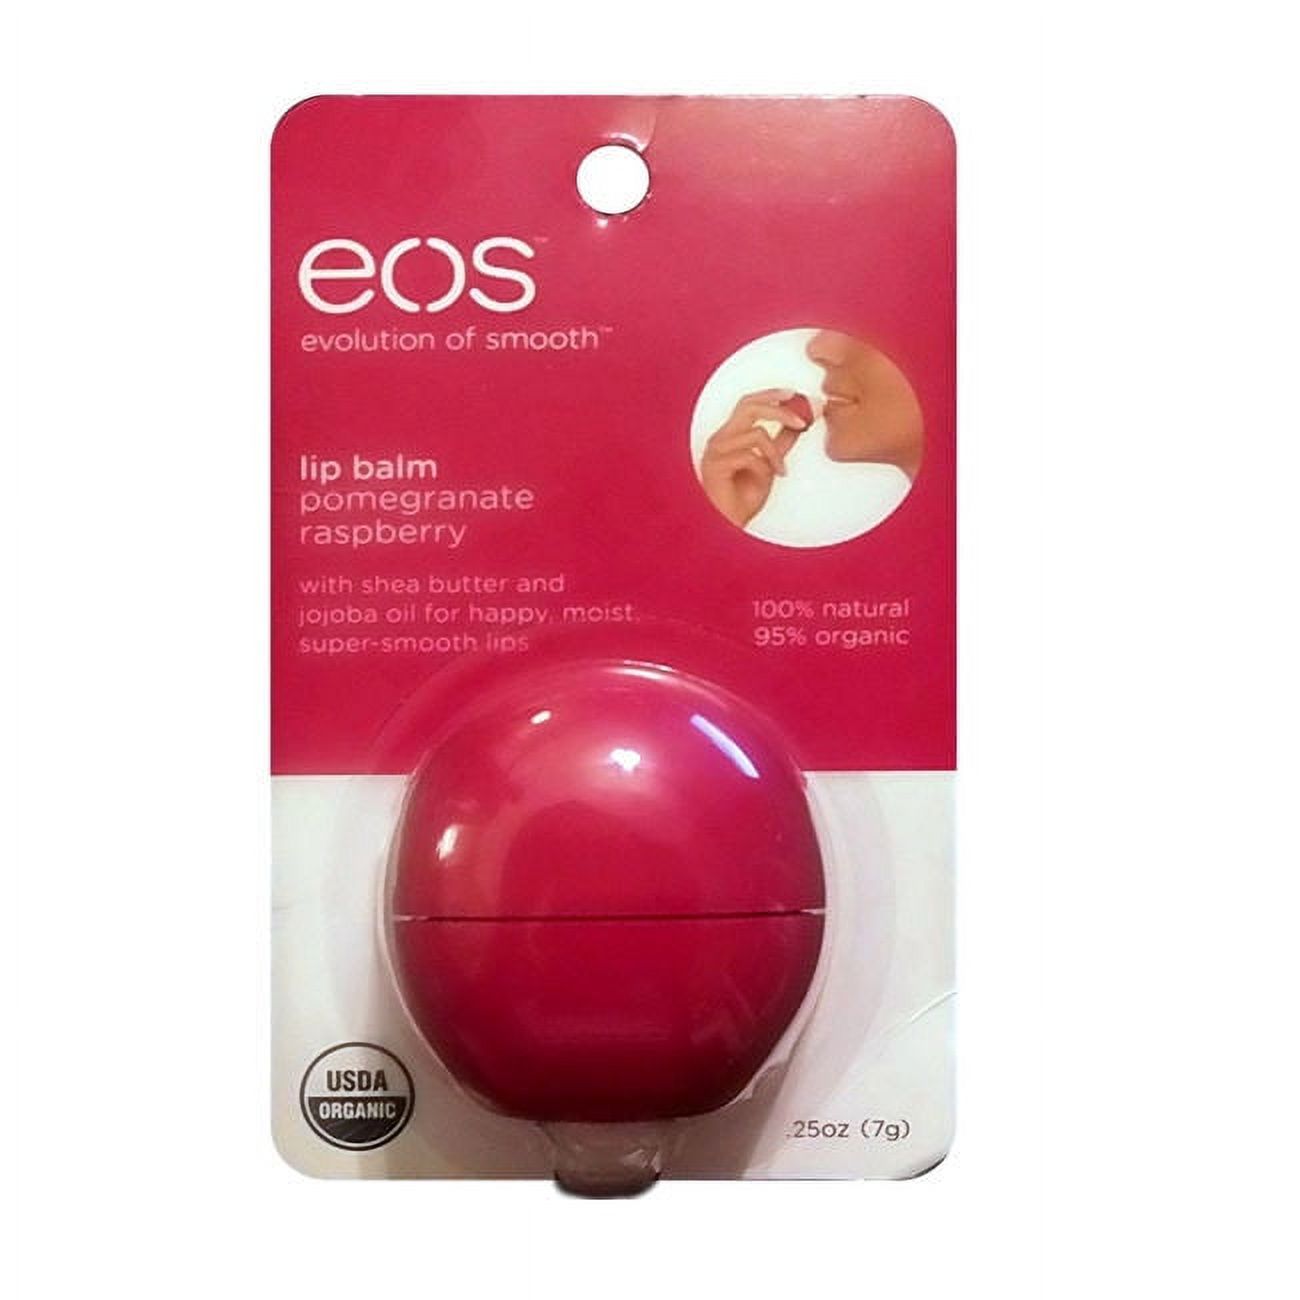 eos Organic Lip Balm, Pomegranate Raspberry - image 3 of 6